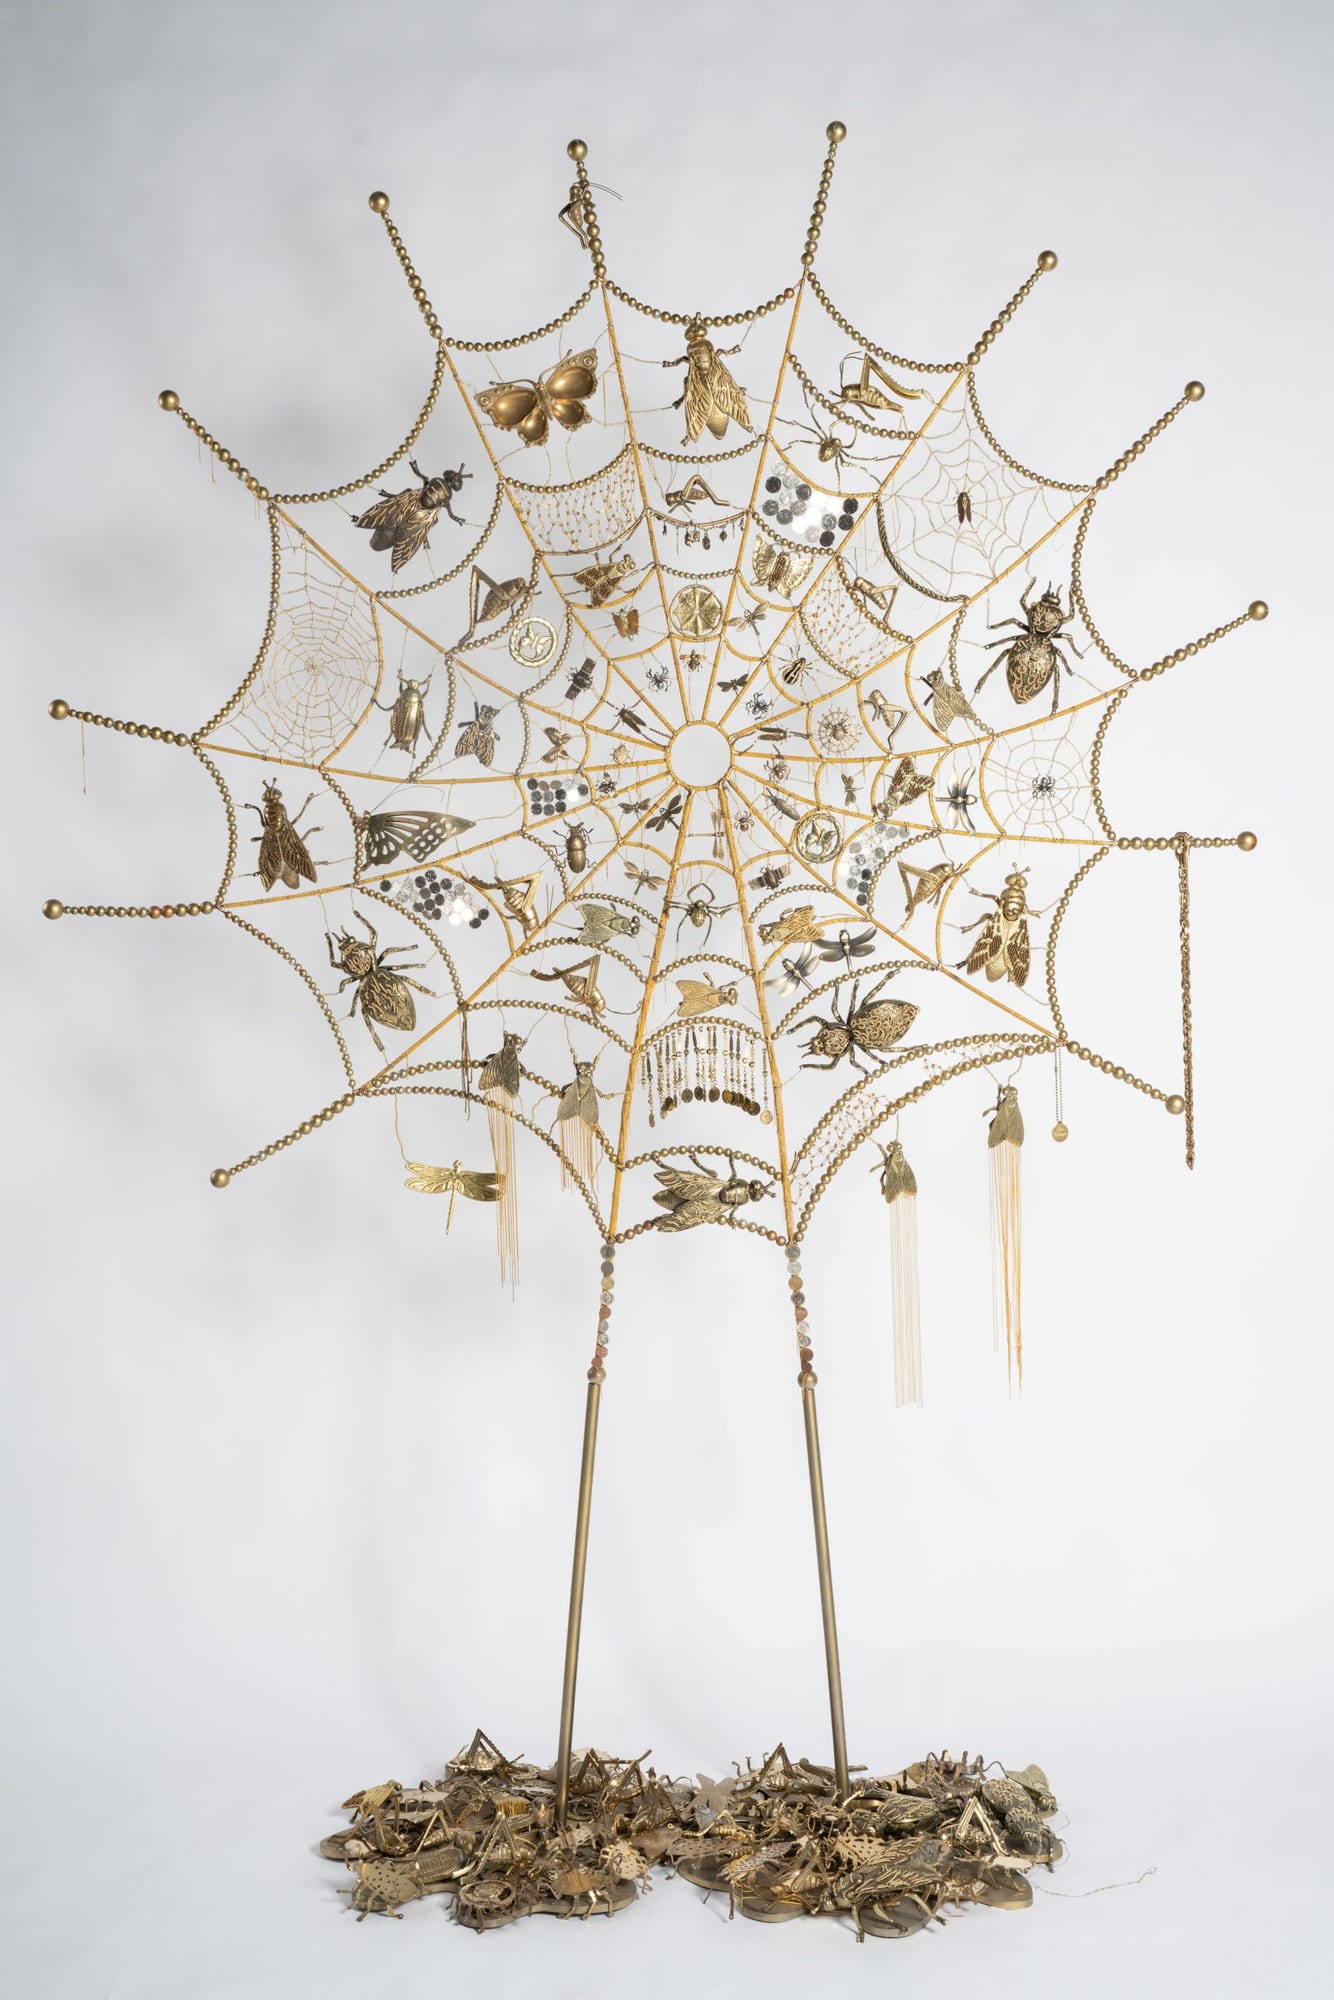 Golden spider web by Ann Carrington. 